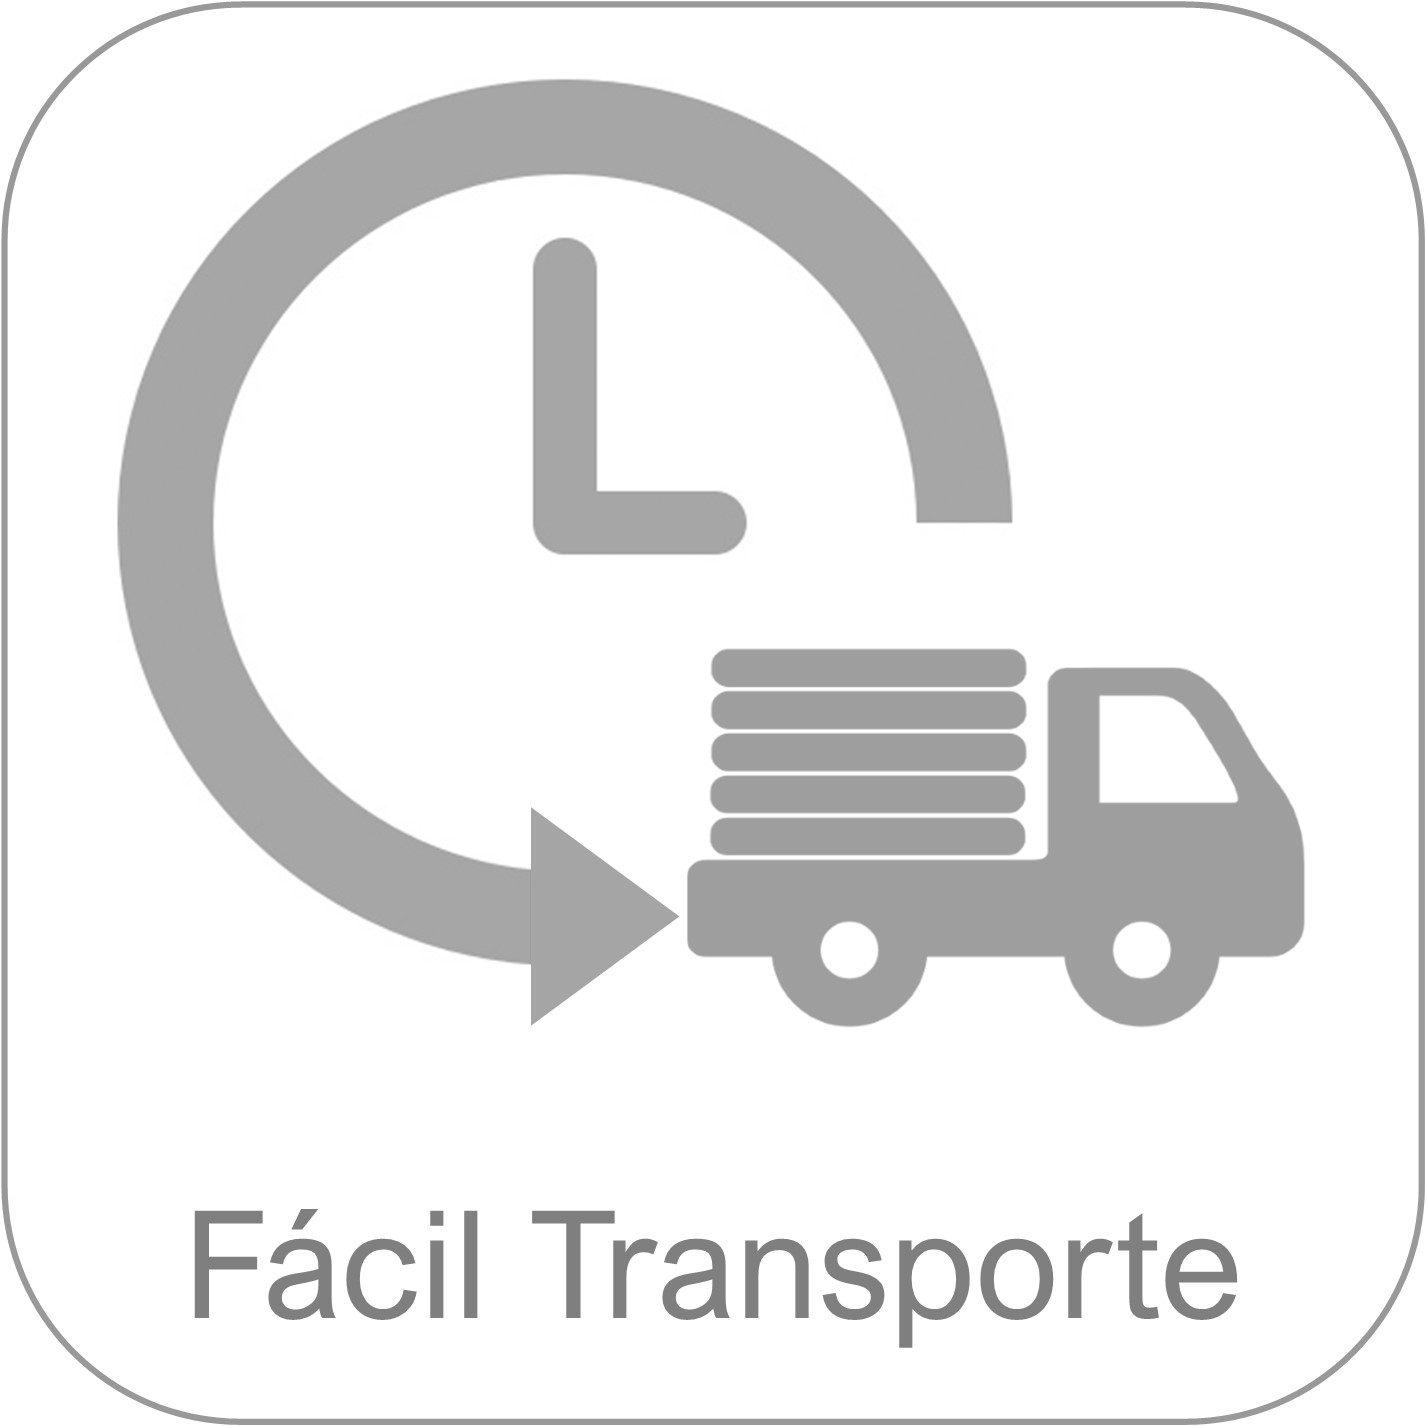 Monobloque CONTAINER - Bodega, almacén - Fácil transporte